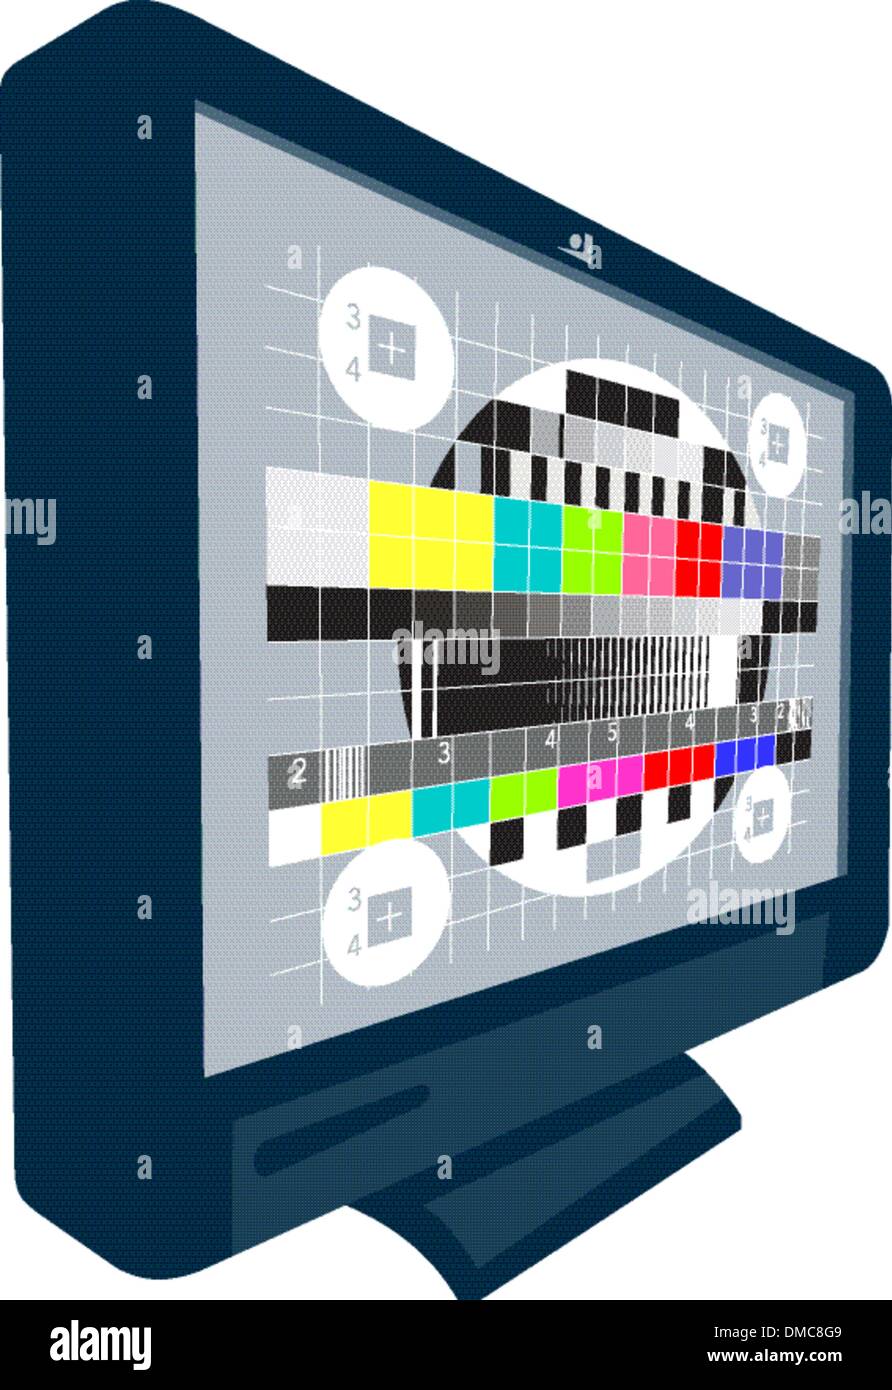 LCD Plasma TV Television Test Pattern Stock Vector